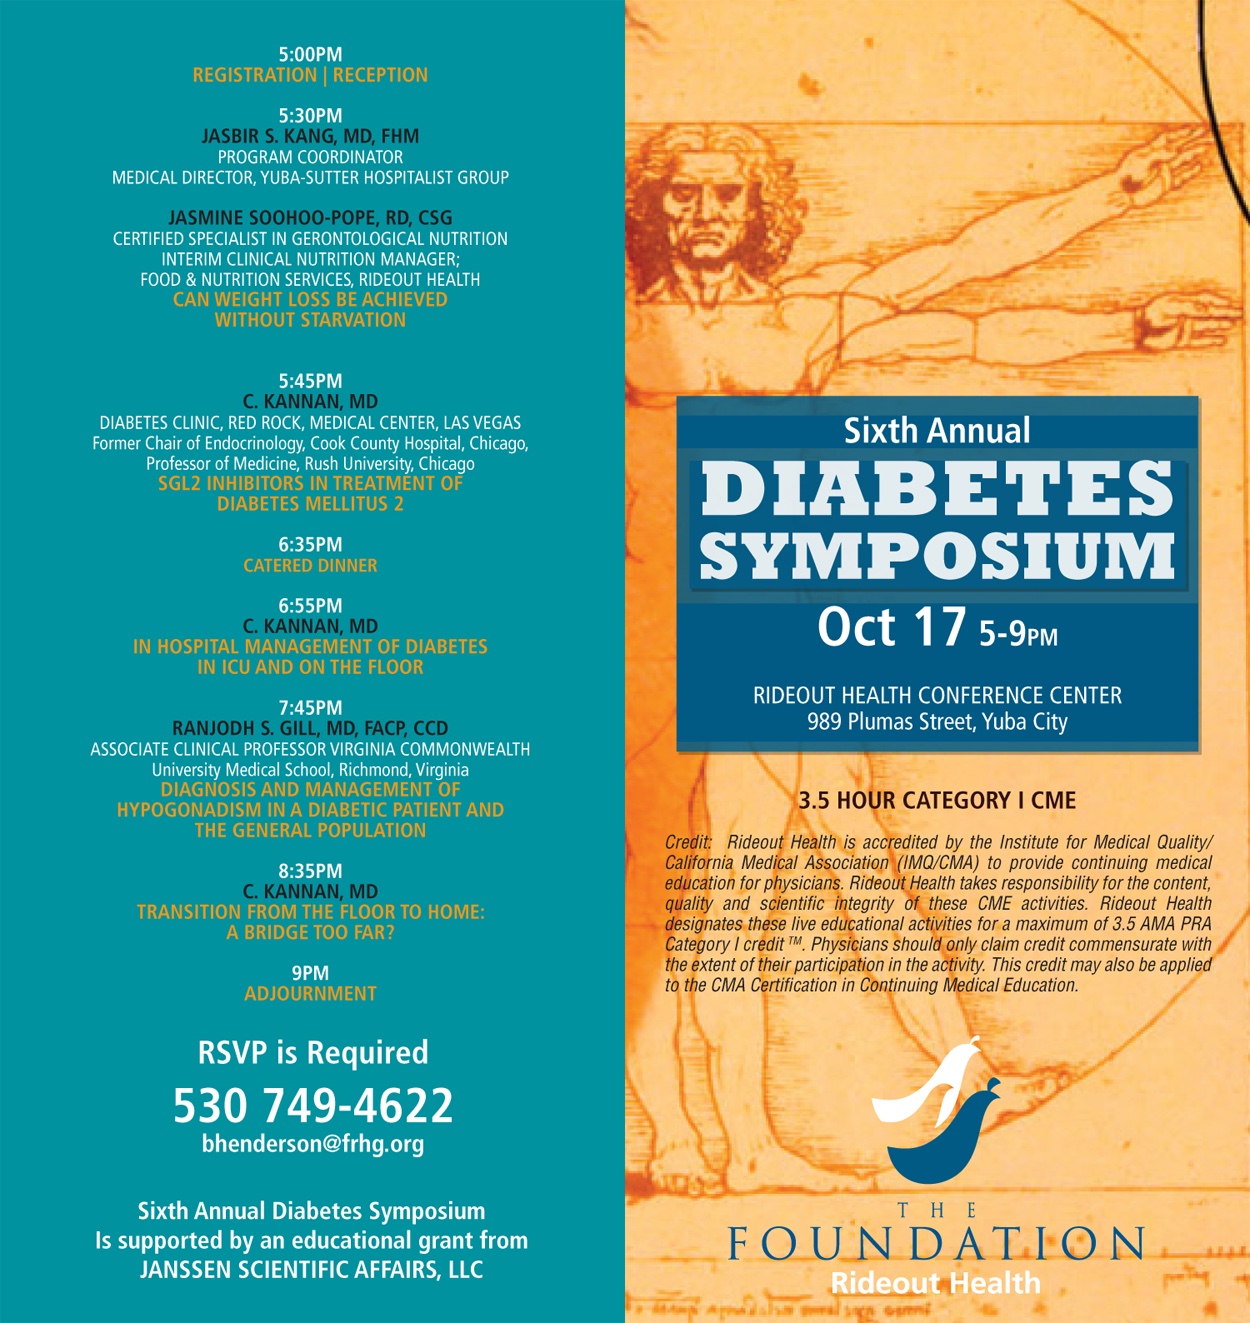 Diabetes Symposium Organized by Dr Kang. Courtesy of the Kang Family.